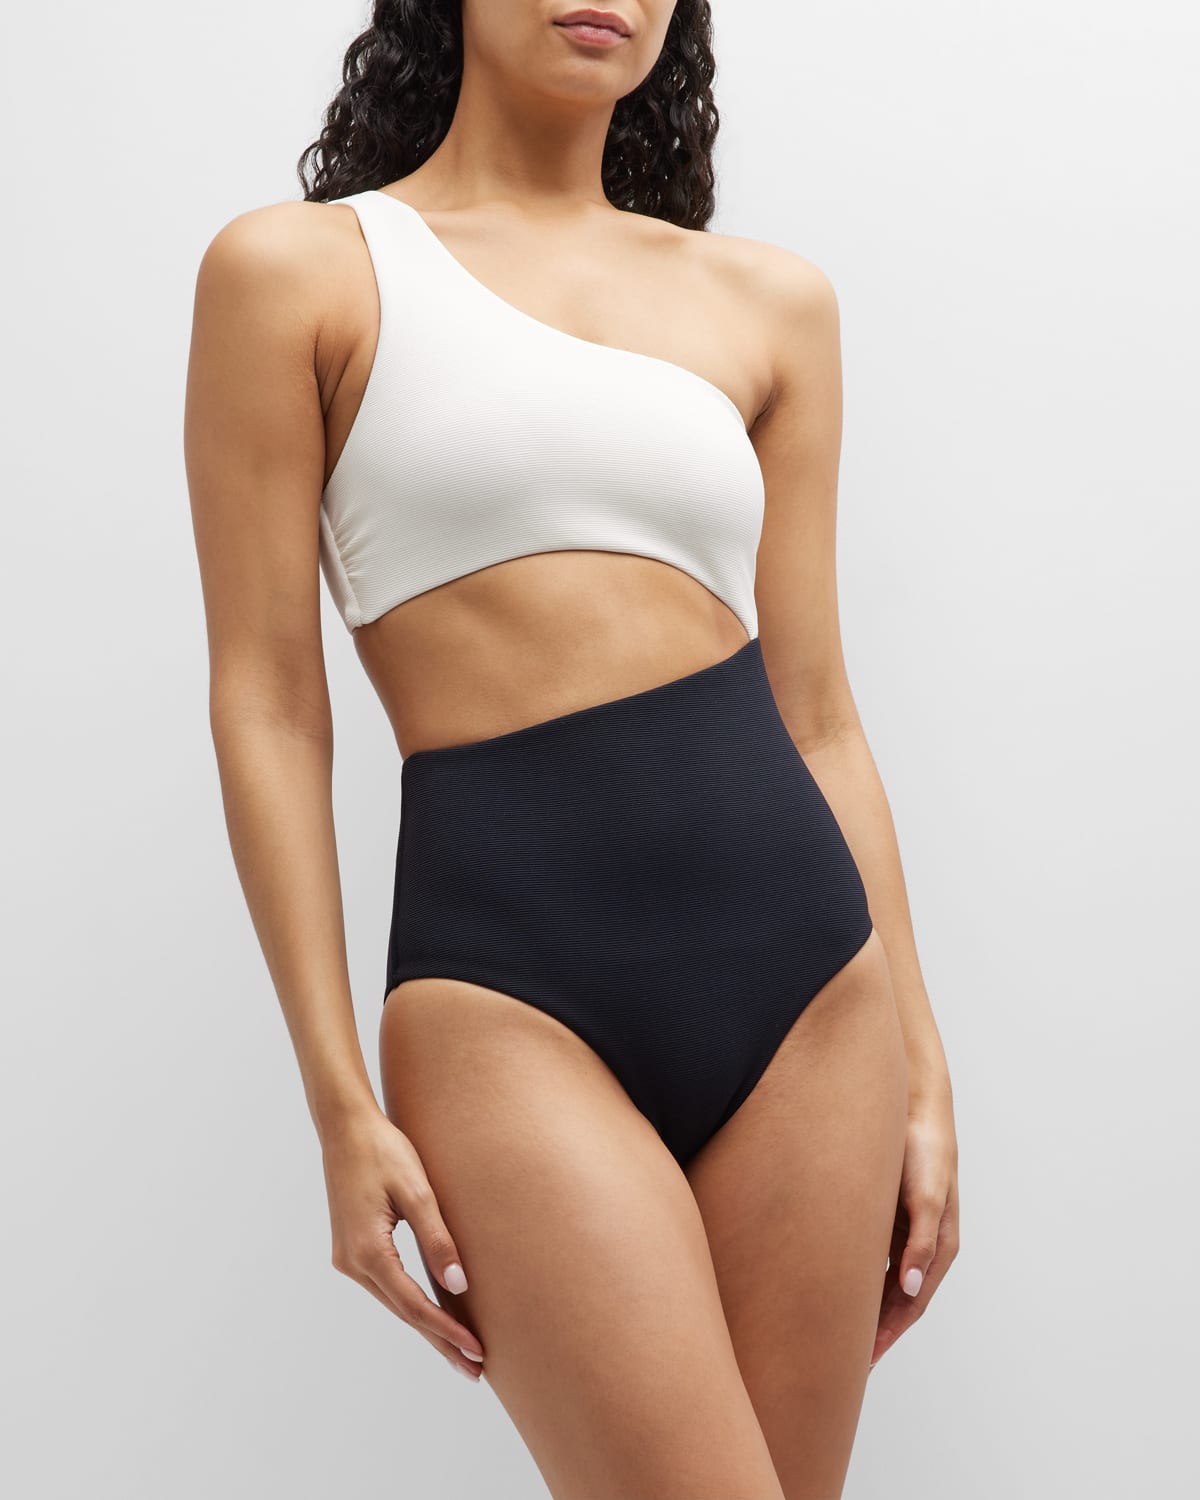 JETS Australia Versa Rib Asymmetric One-Piece Swimsuit